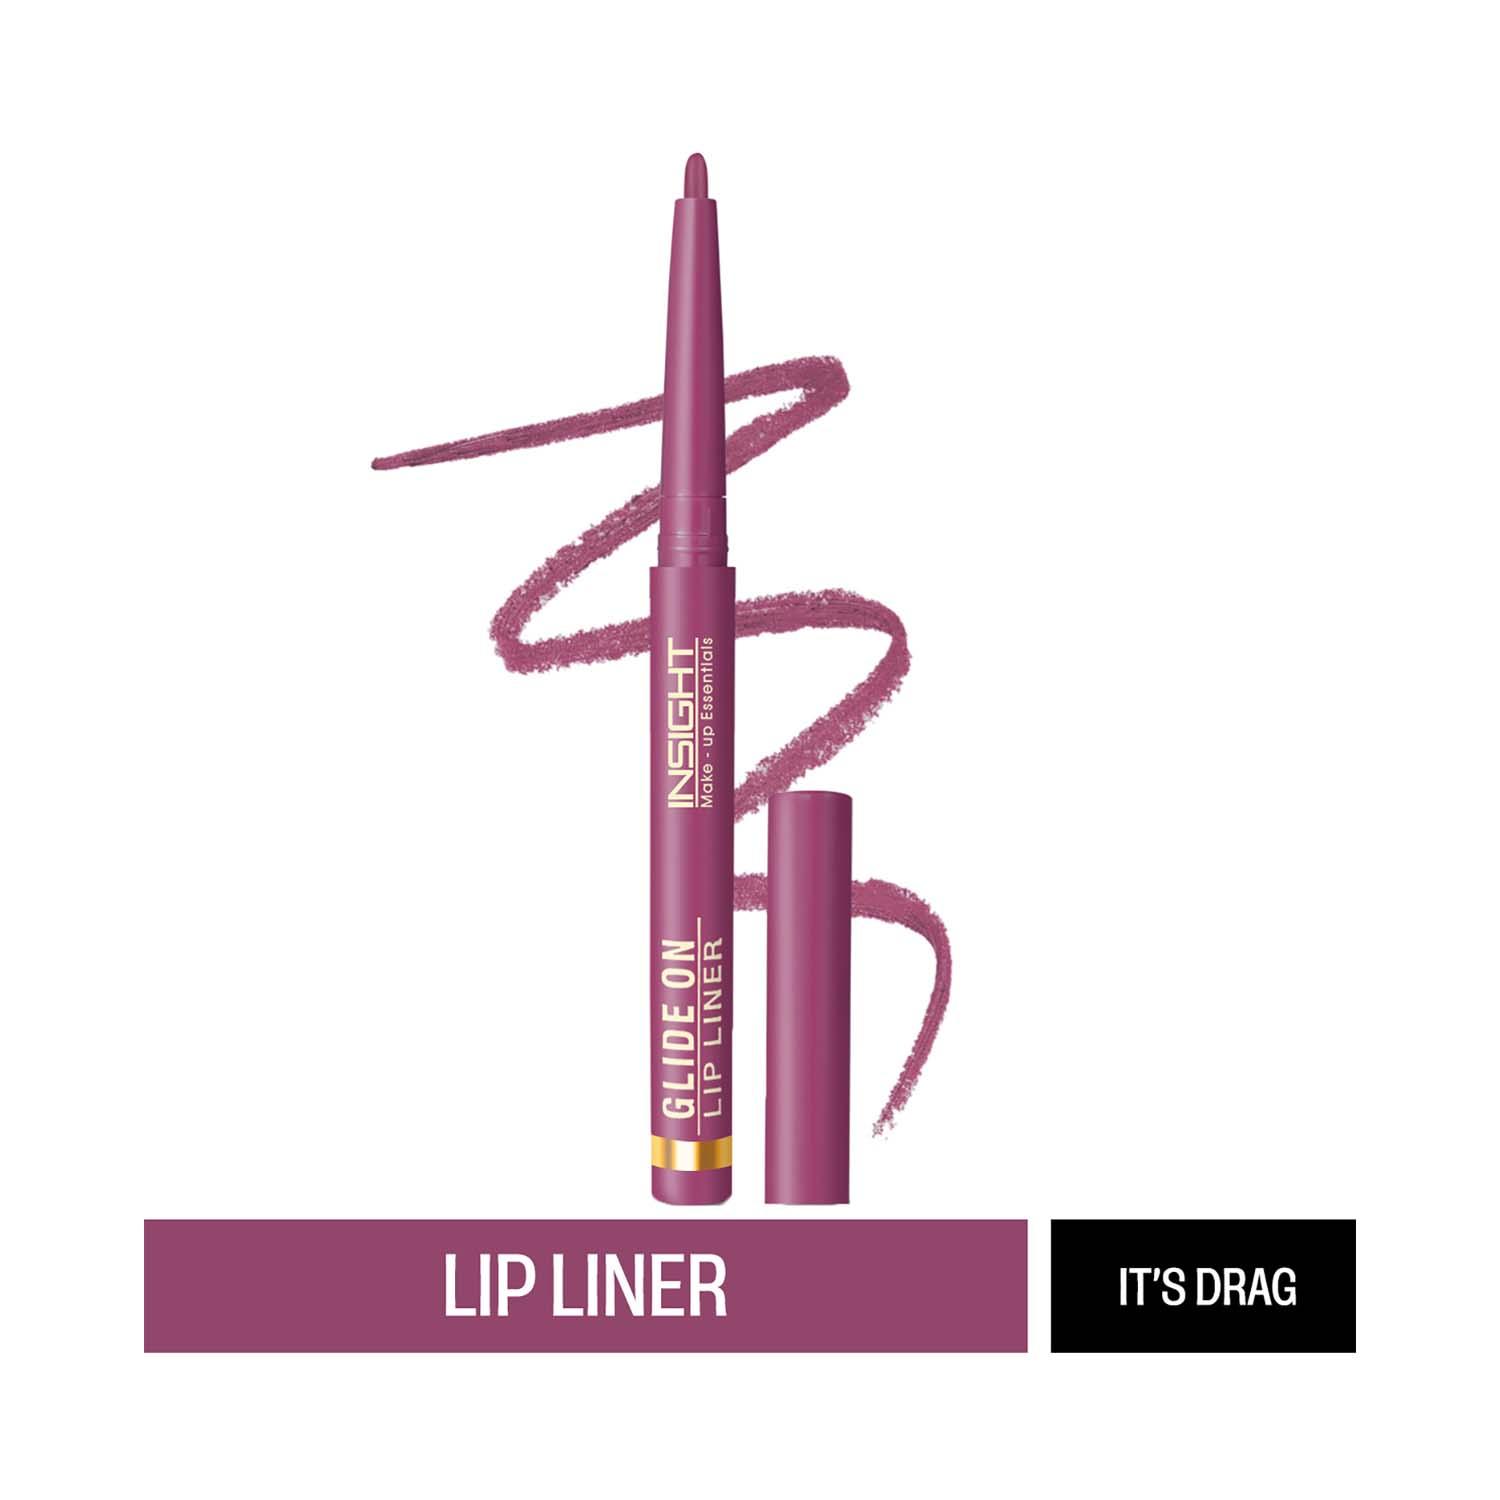 Insight Cosmetics | Insight Cosmetics Glide On Lip Liner - It's Drag (0.3 g)